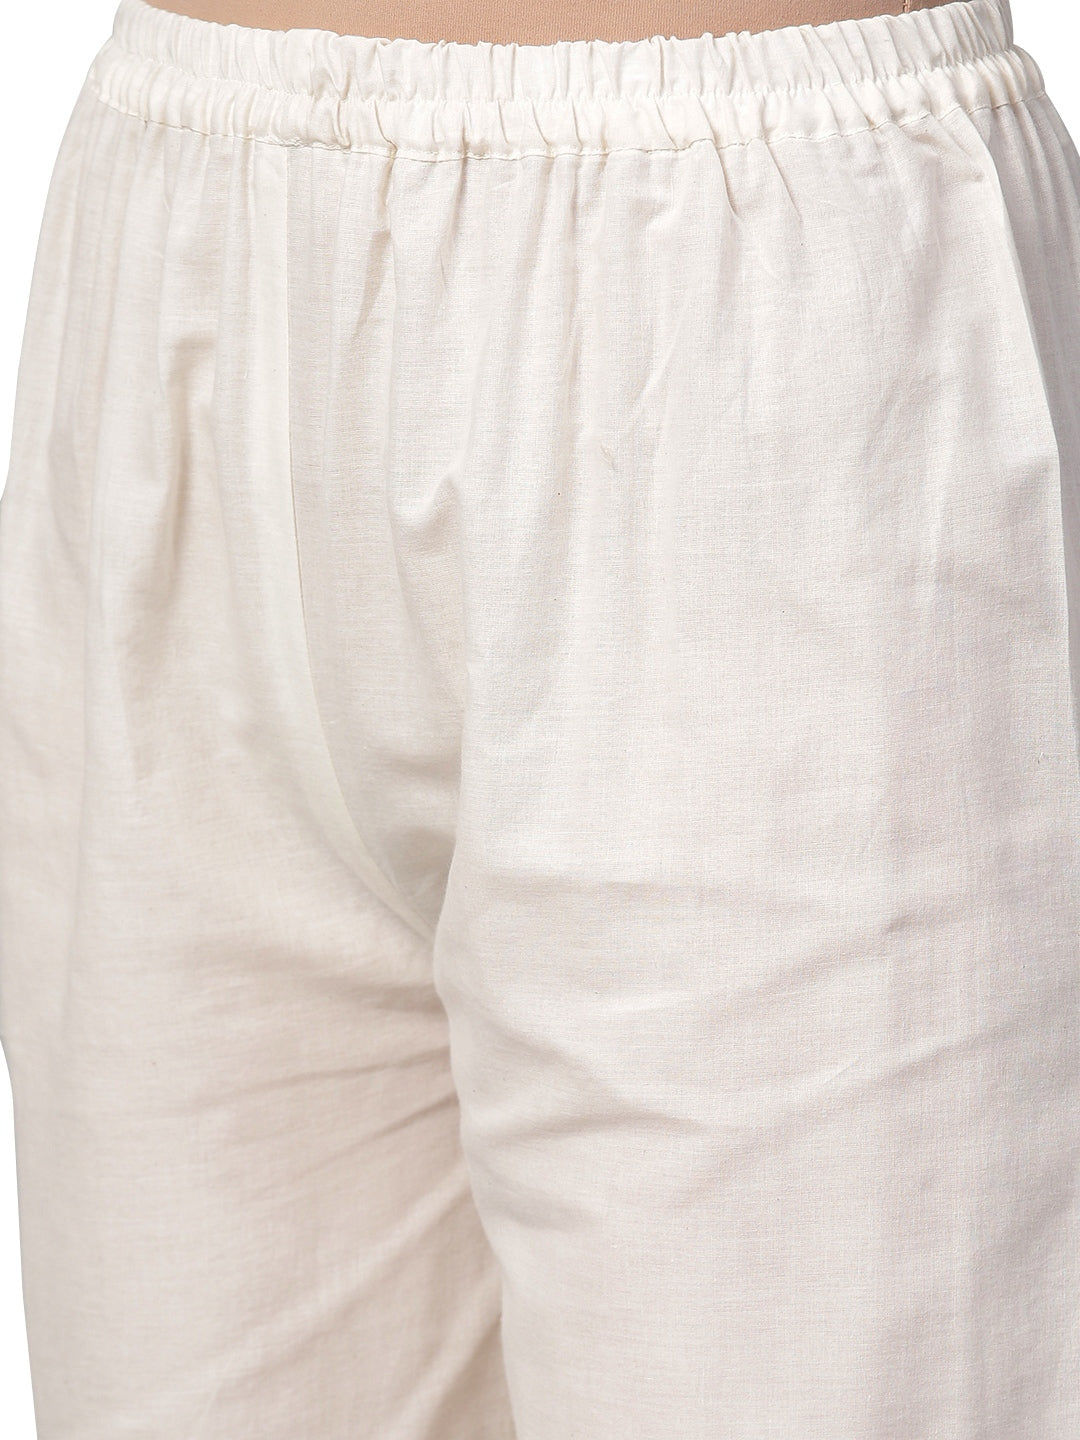 Women's Off White Cotton Blend Printed Kurta Trouser Set- Ahalyaa